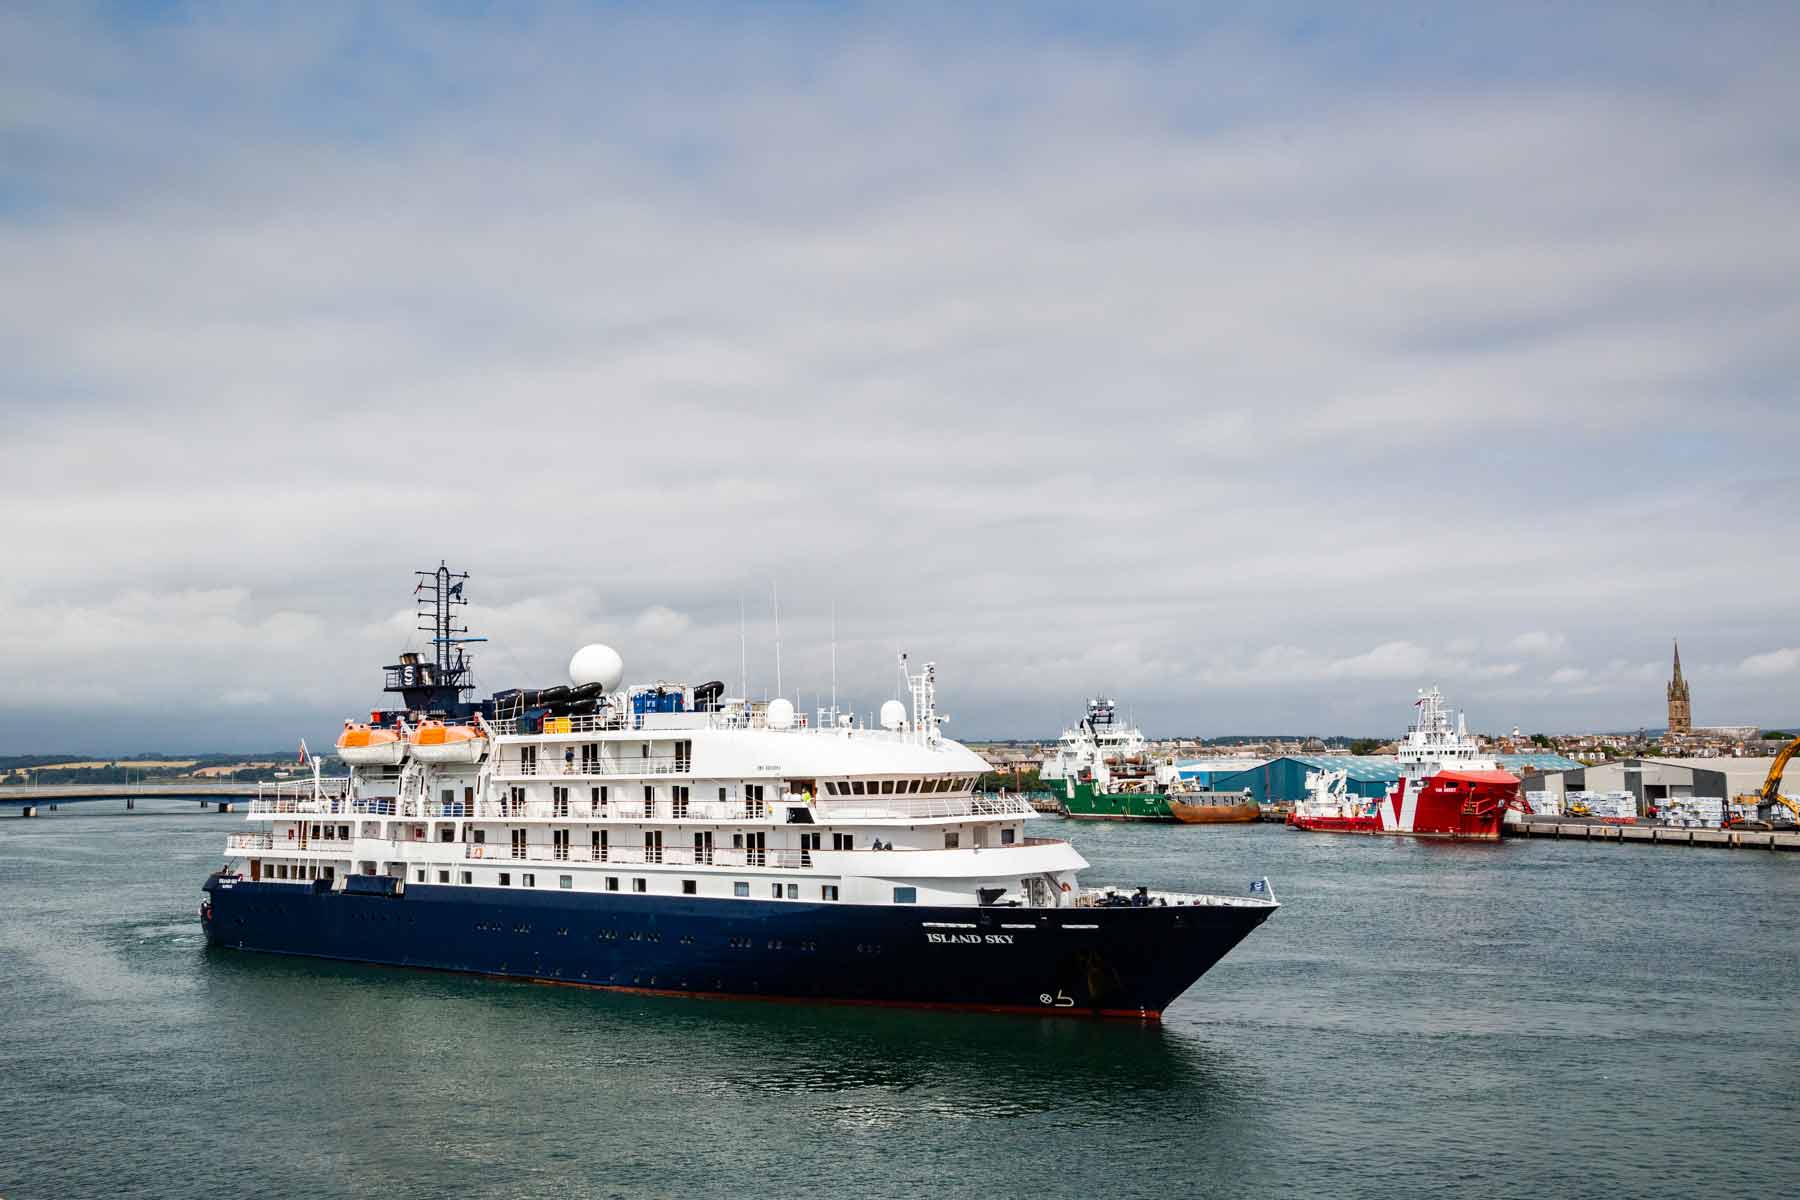 Island Sky Cruise Ship at Montrose Port